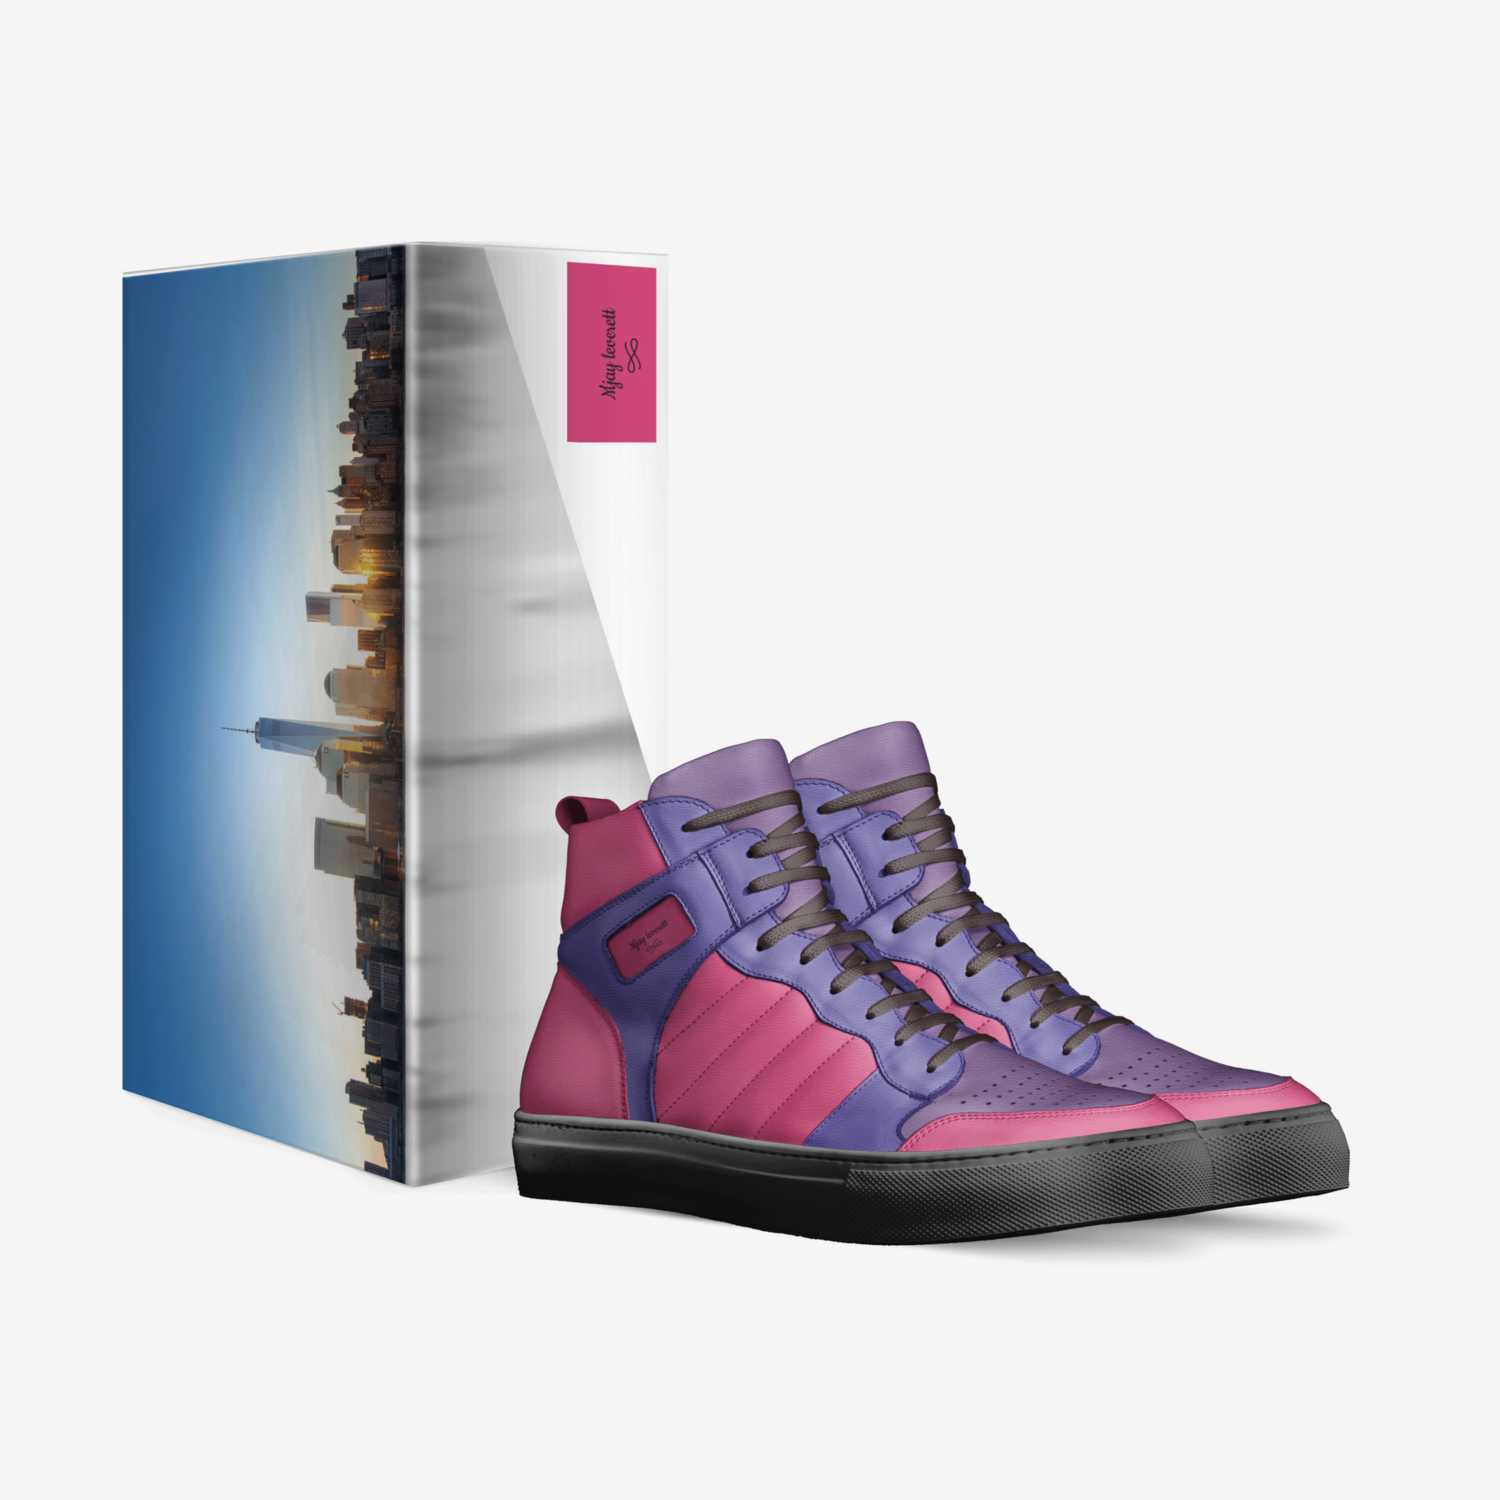 Mjay leverett custom made in Italy shoes by Manajah Leverett | Box view